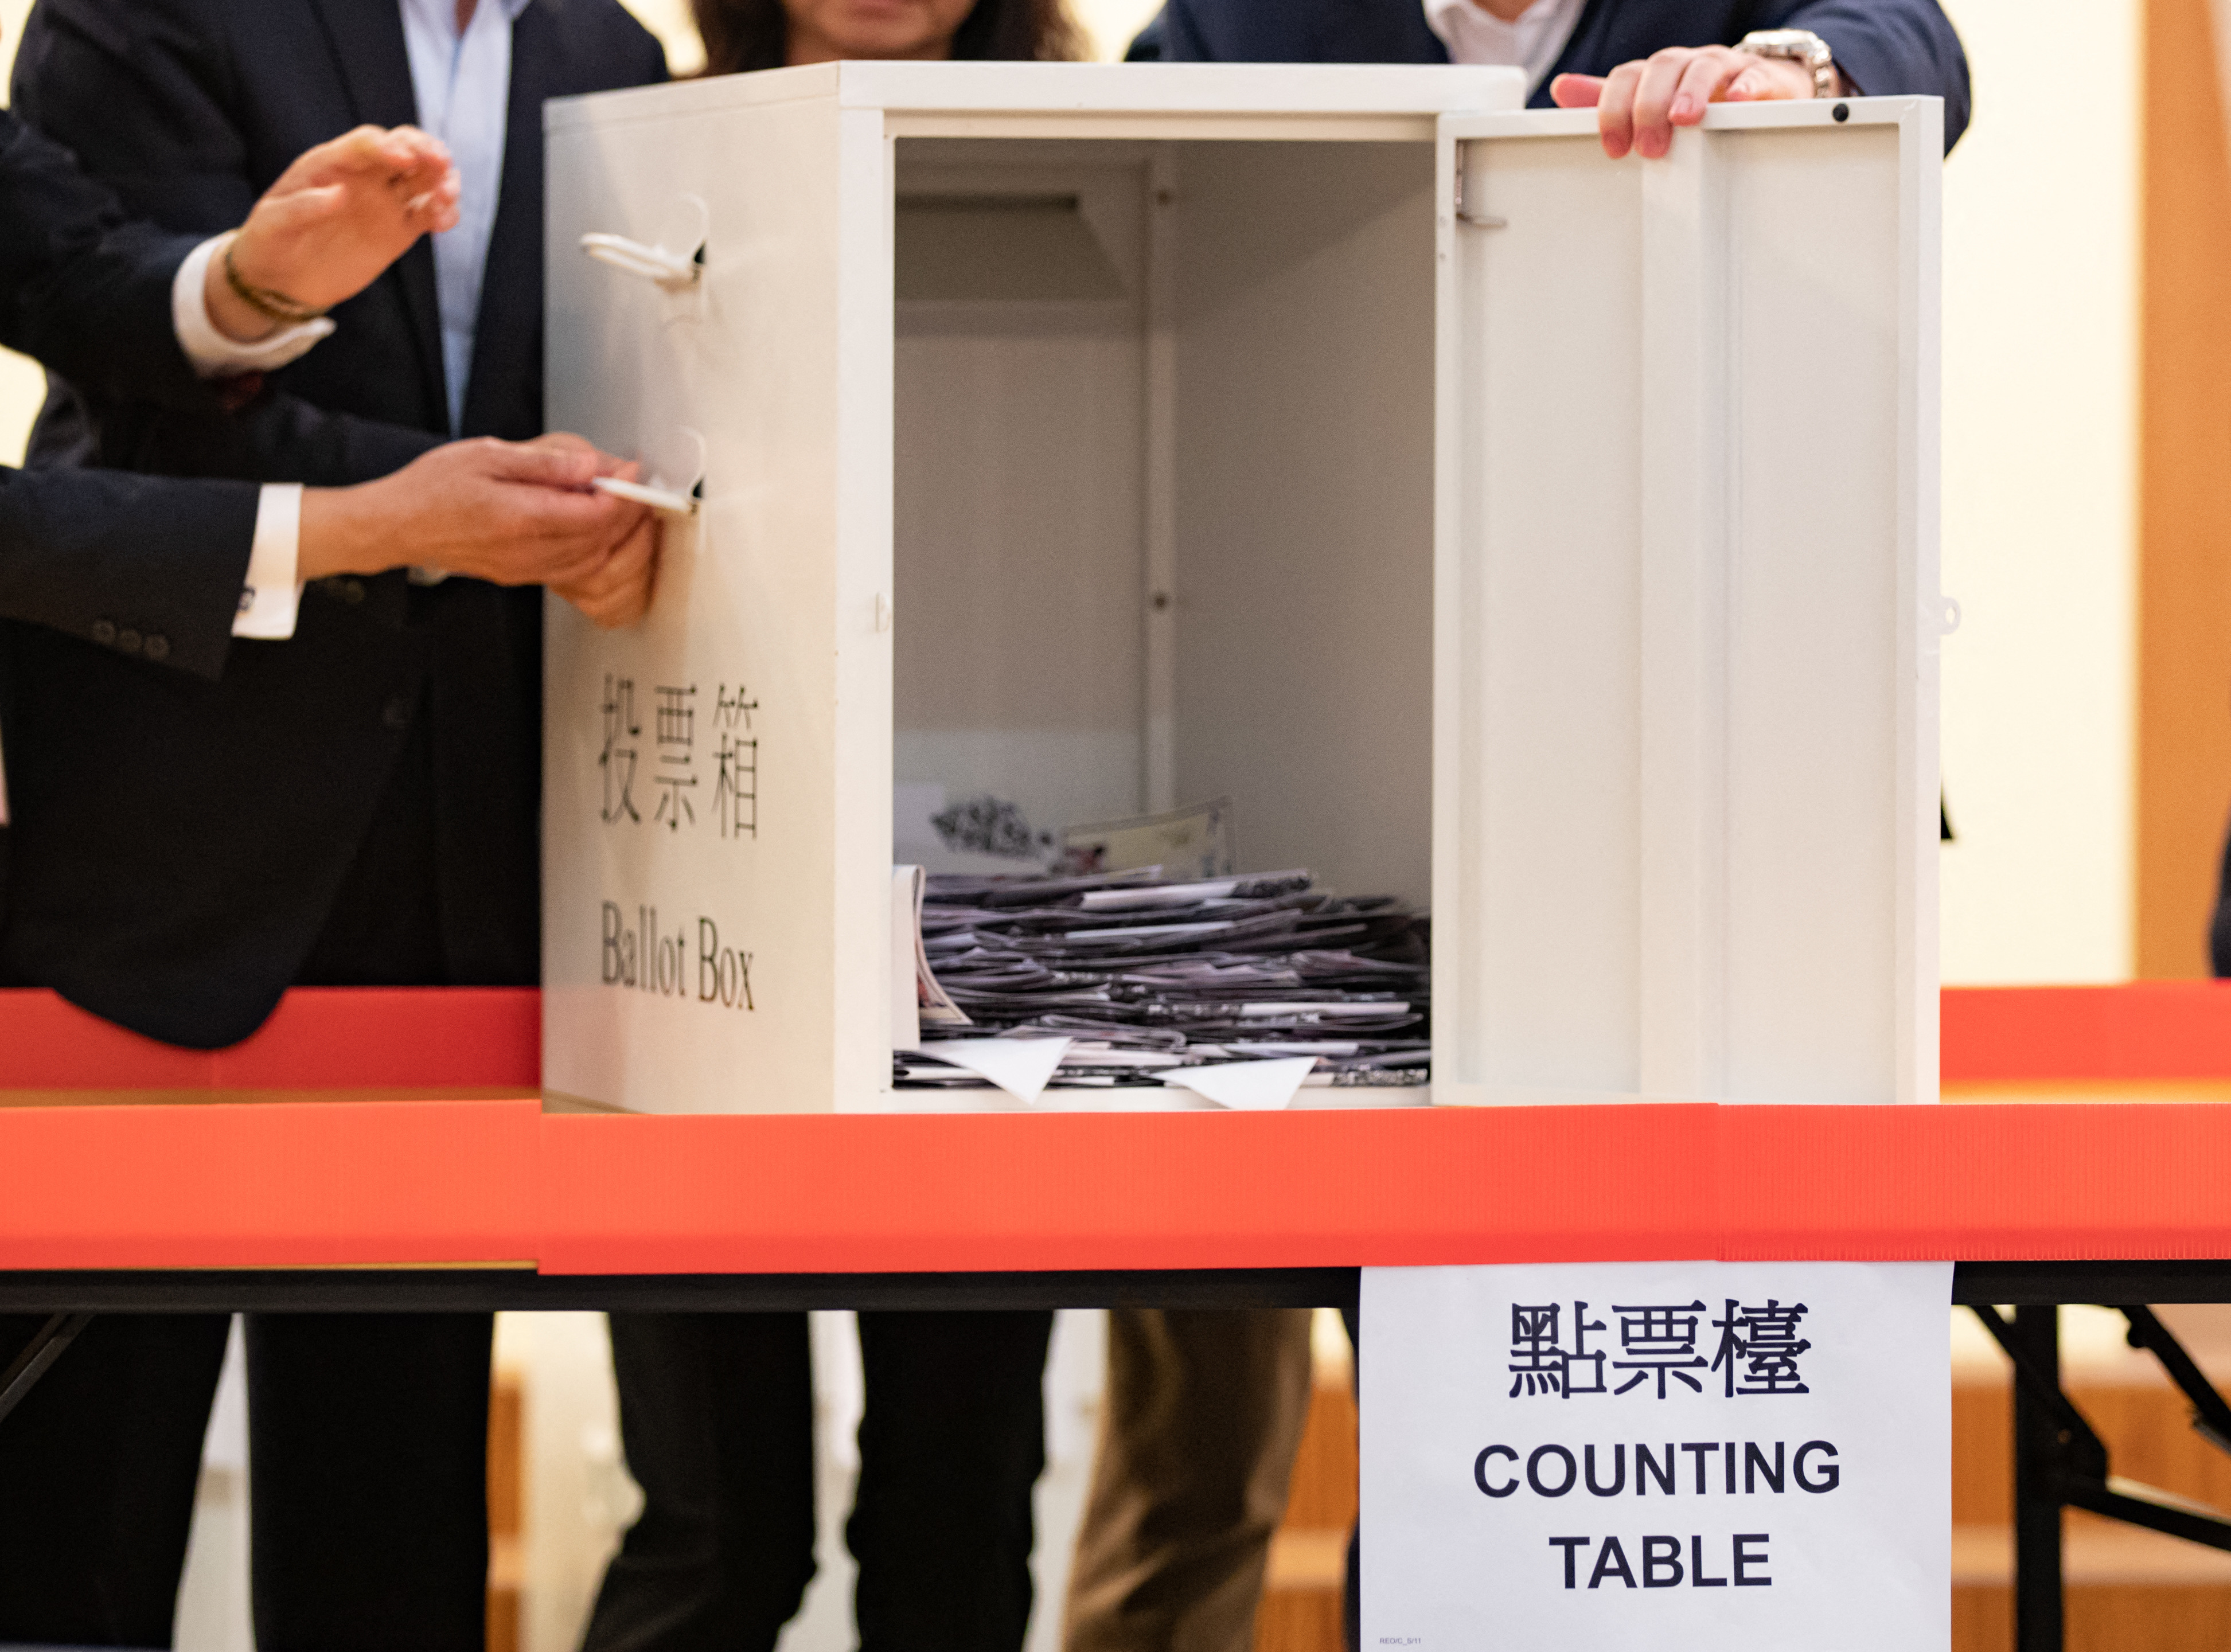 Wahlurne in HK